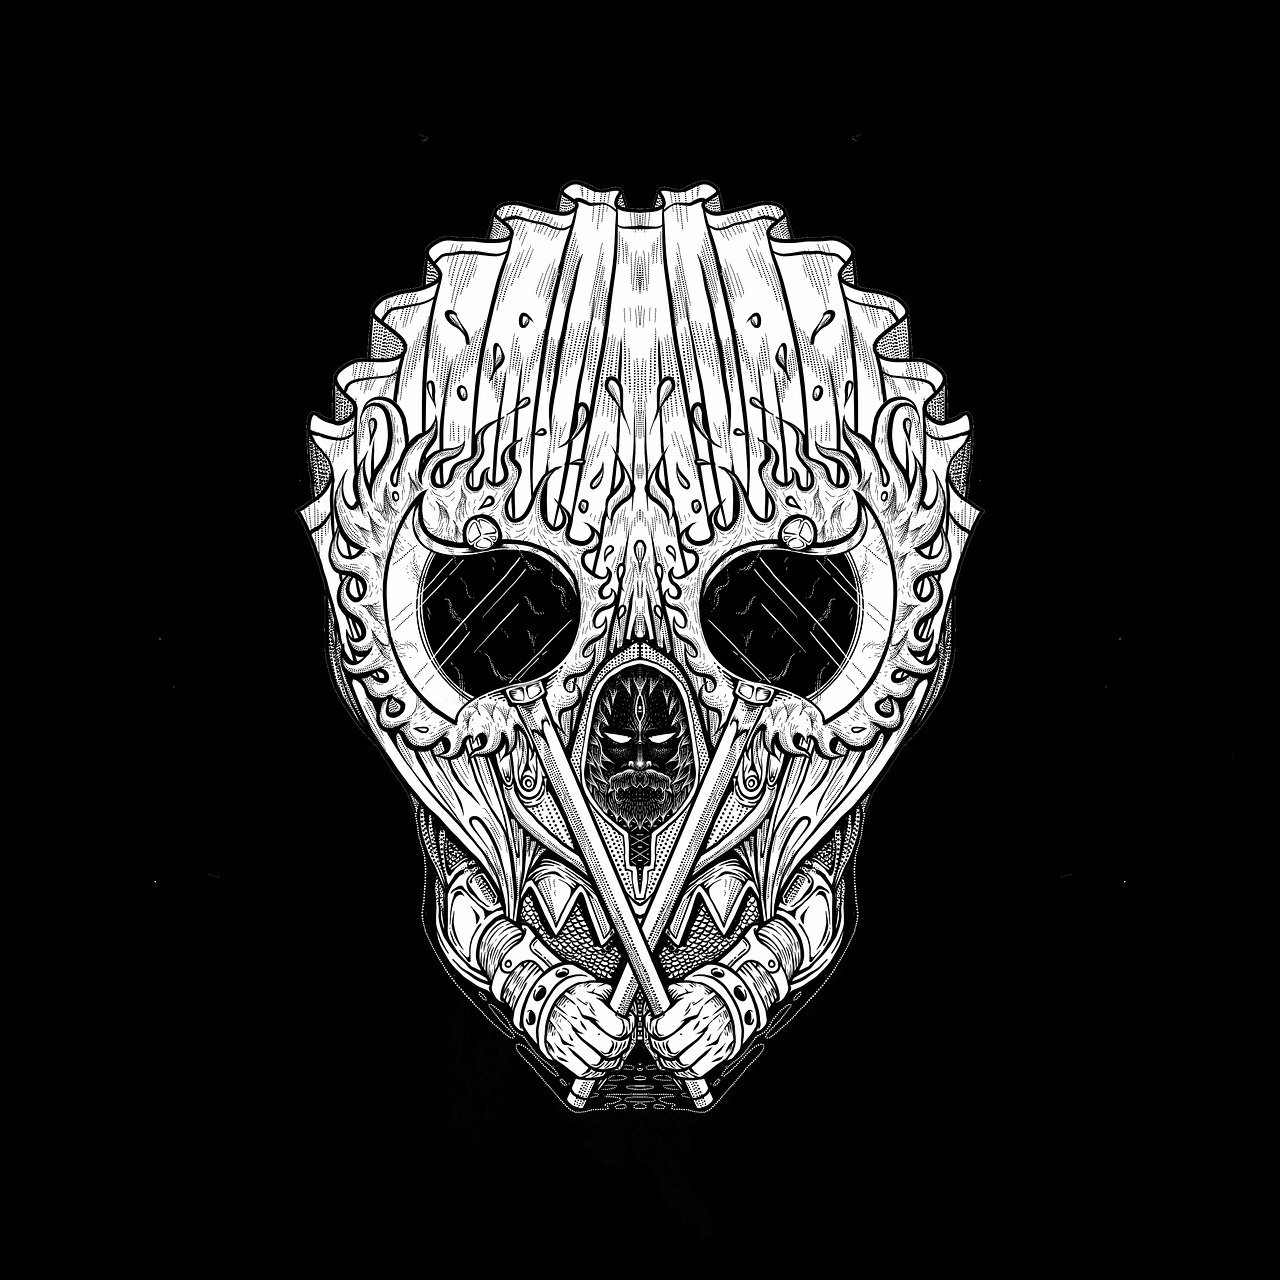 a black and white drawing of a skull, vector art, by Patrick Adam, vanitas, metal mask, symmetrical artwork. cinematic, metal album cover, threyda